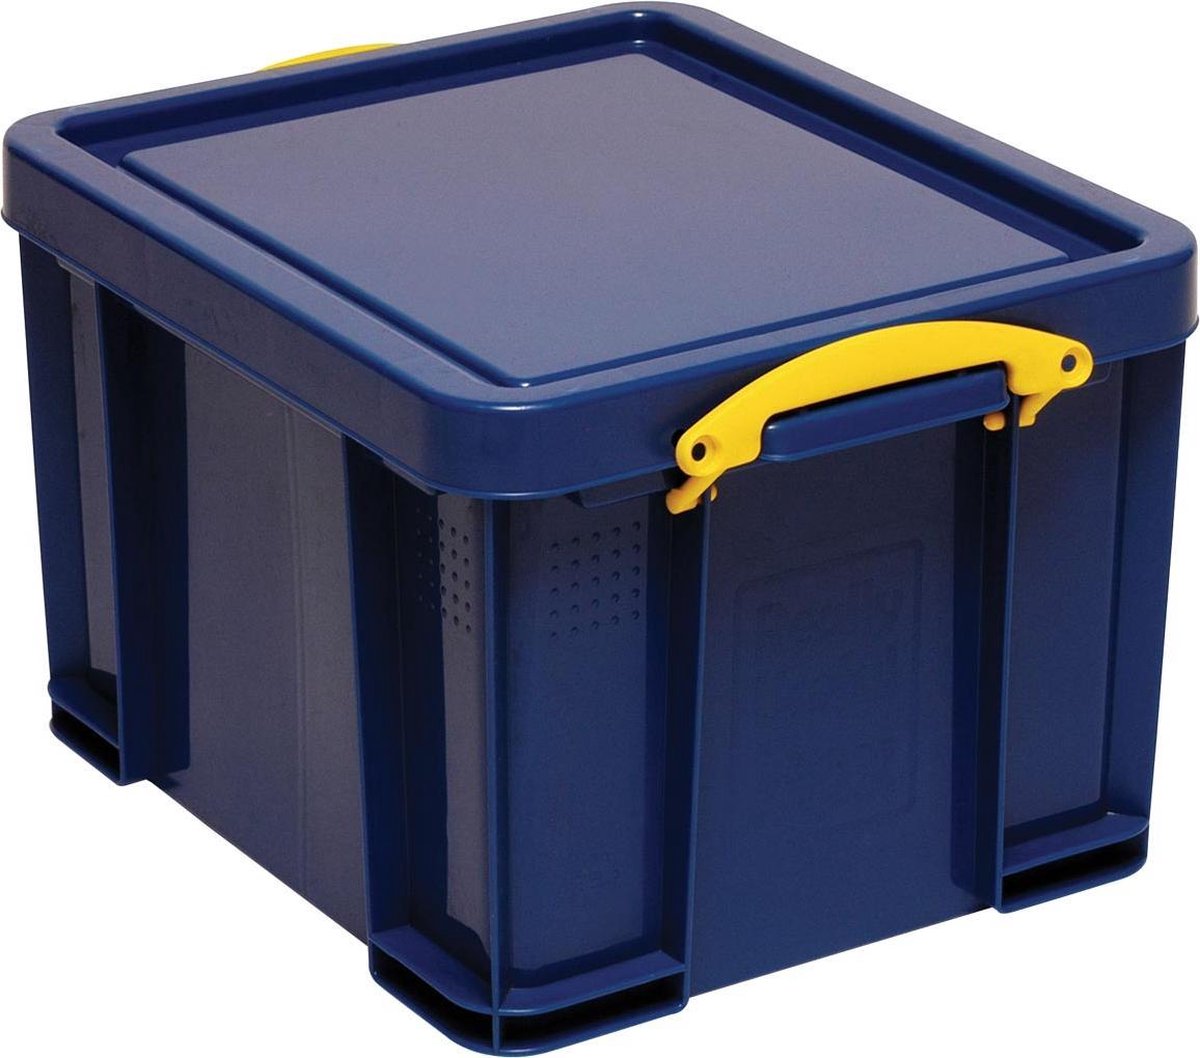 Really Useful Box opbergdoos 35 liter donkerblauw met gele handvaten - Really Useful Box